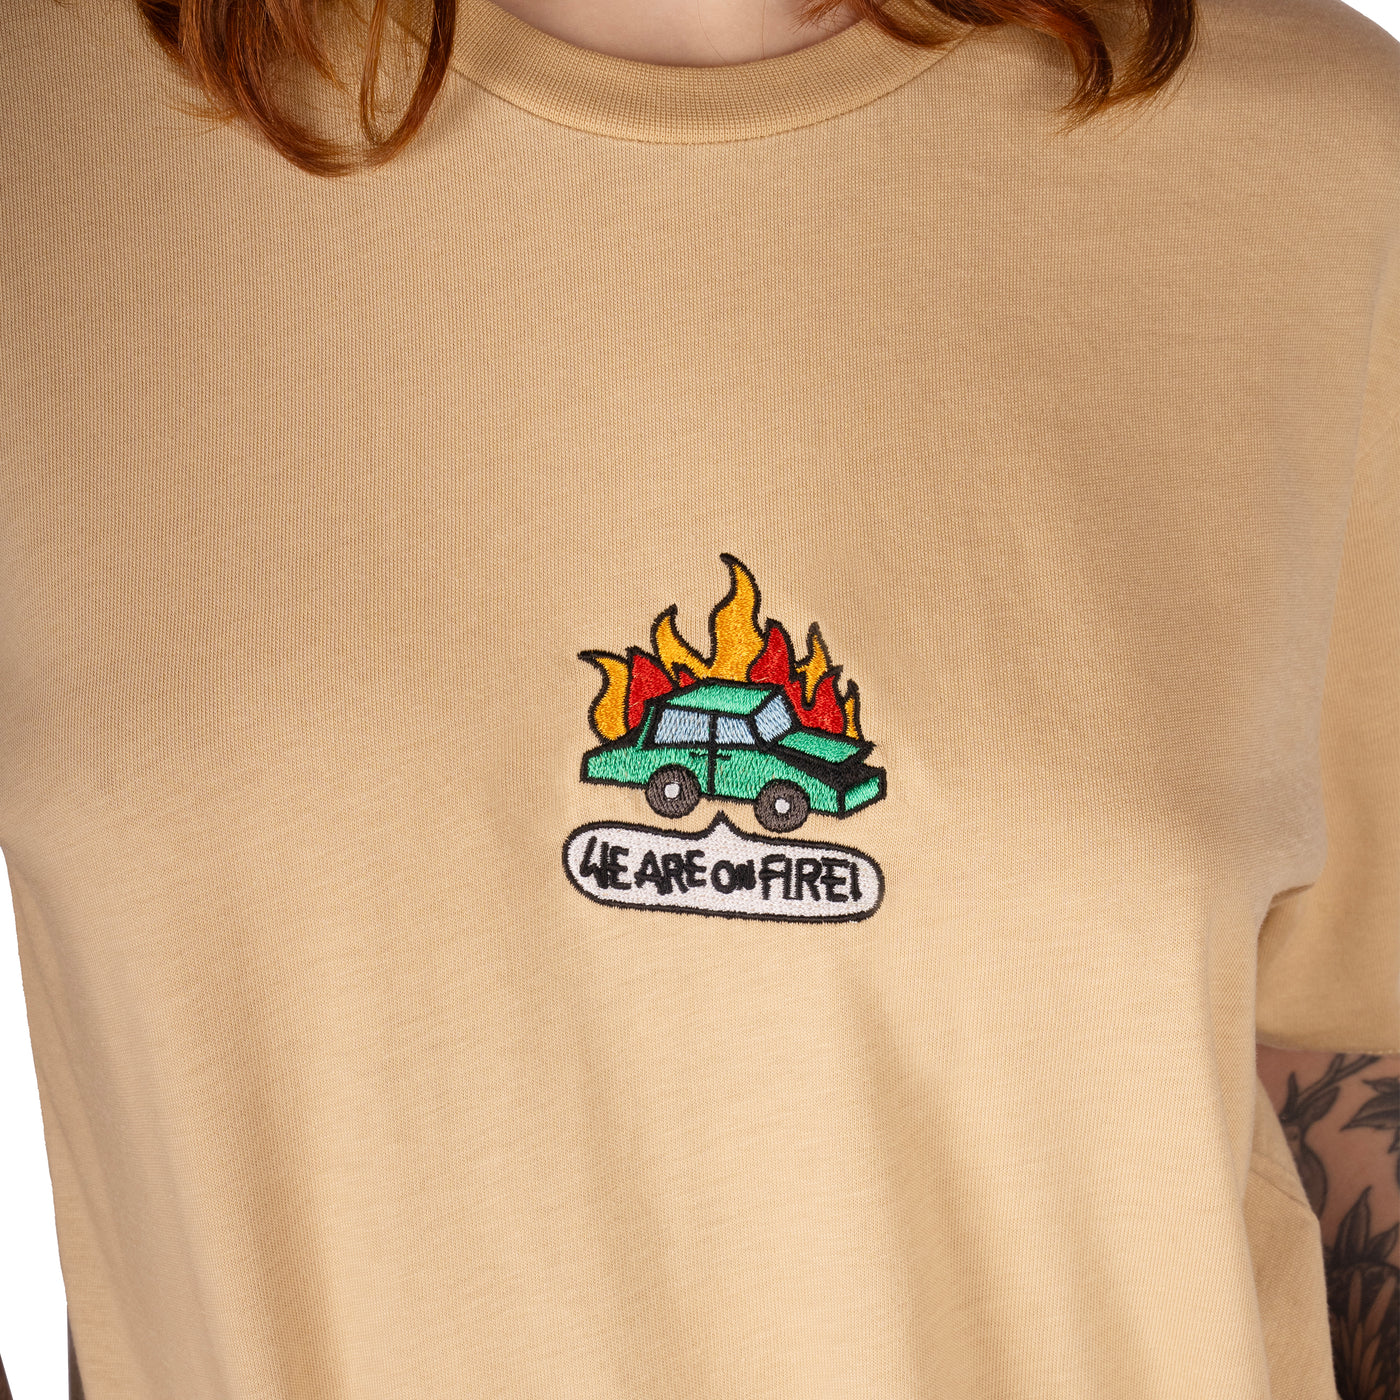 We are on fire - Camiseta